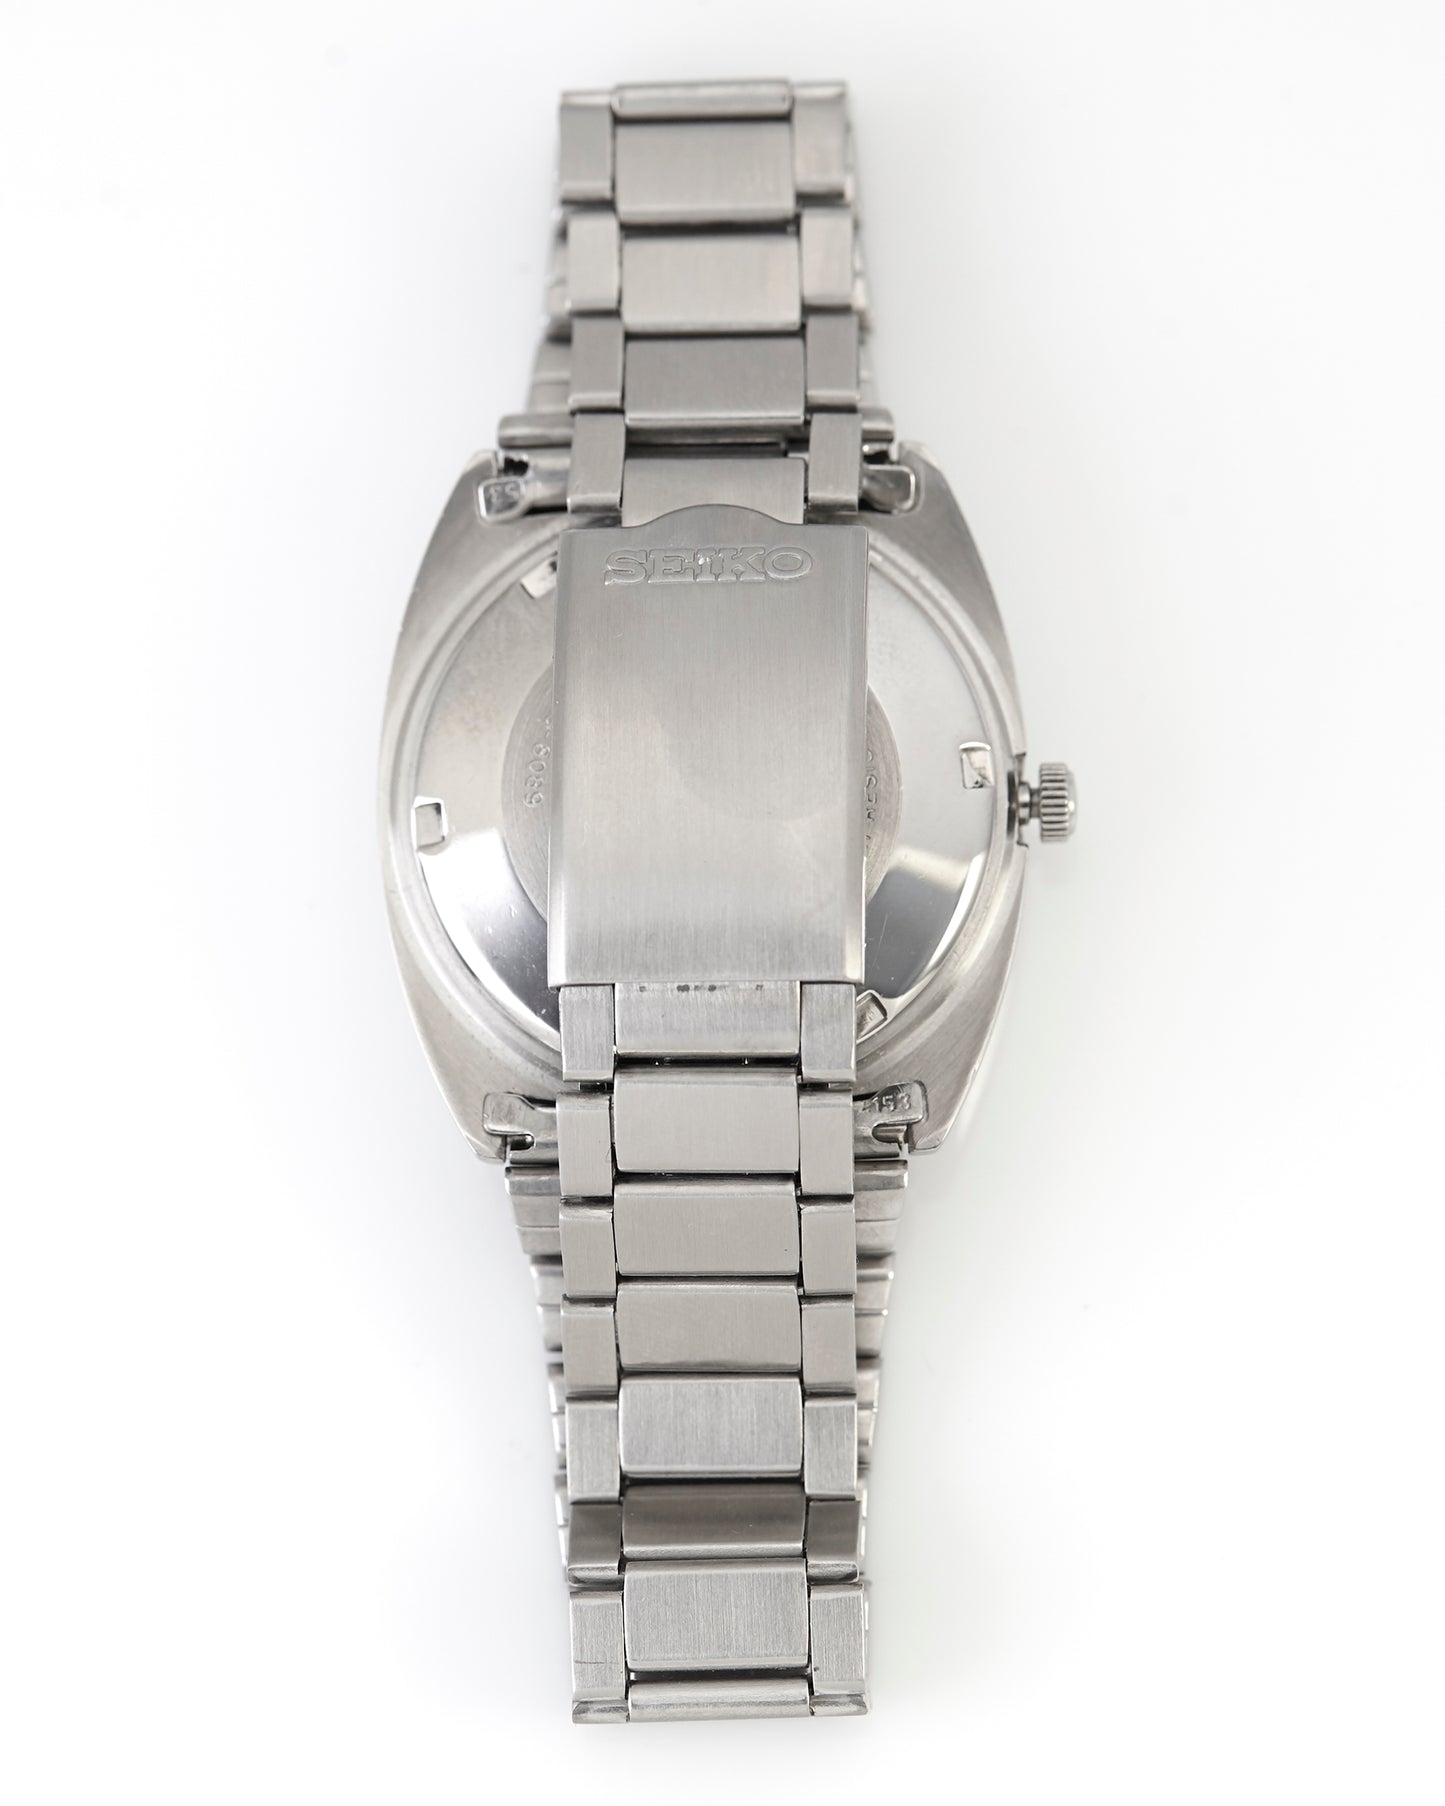 Seiko 6309-8089 Day Date Automatic Vintage Wristwatch